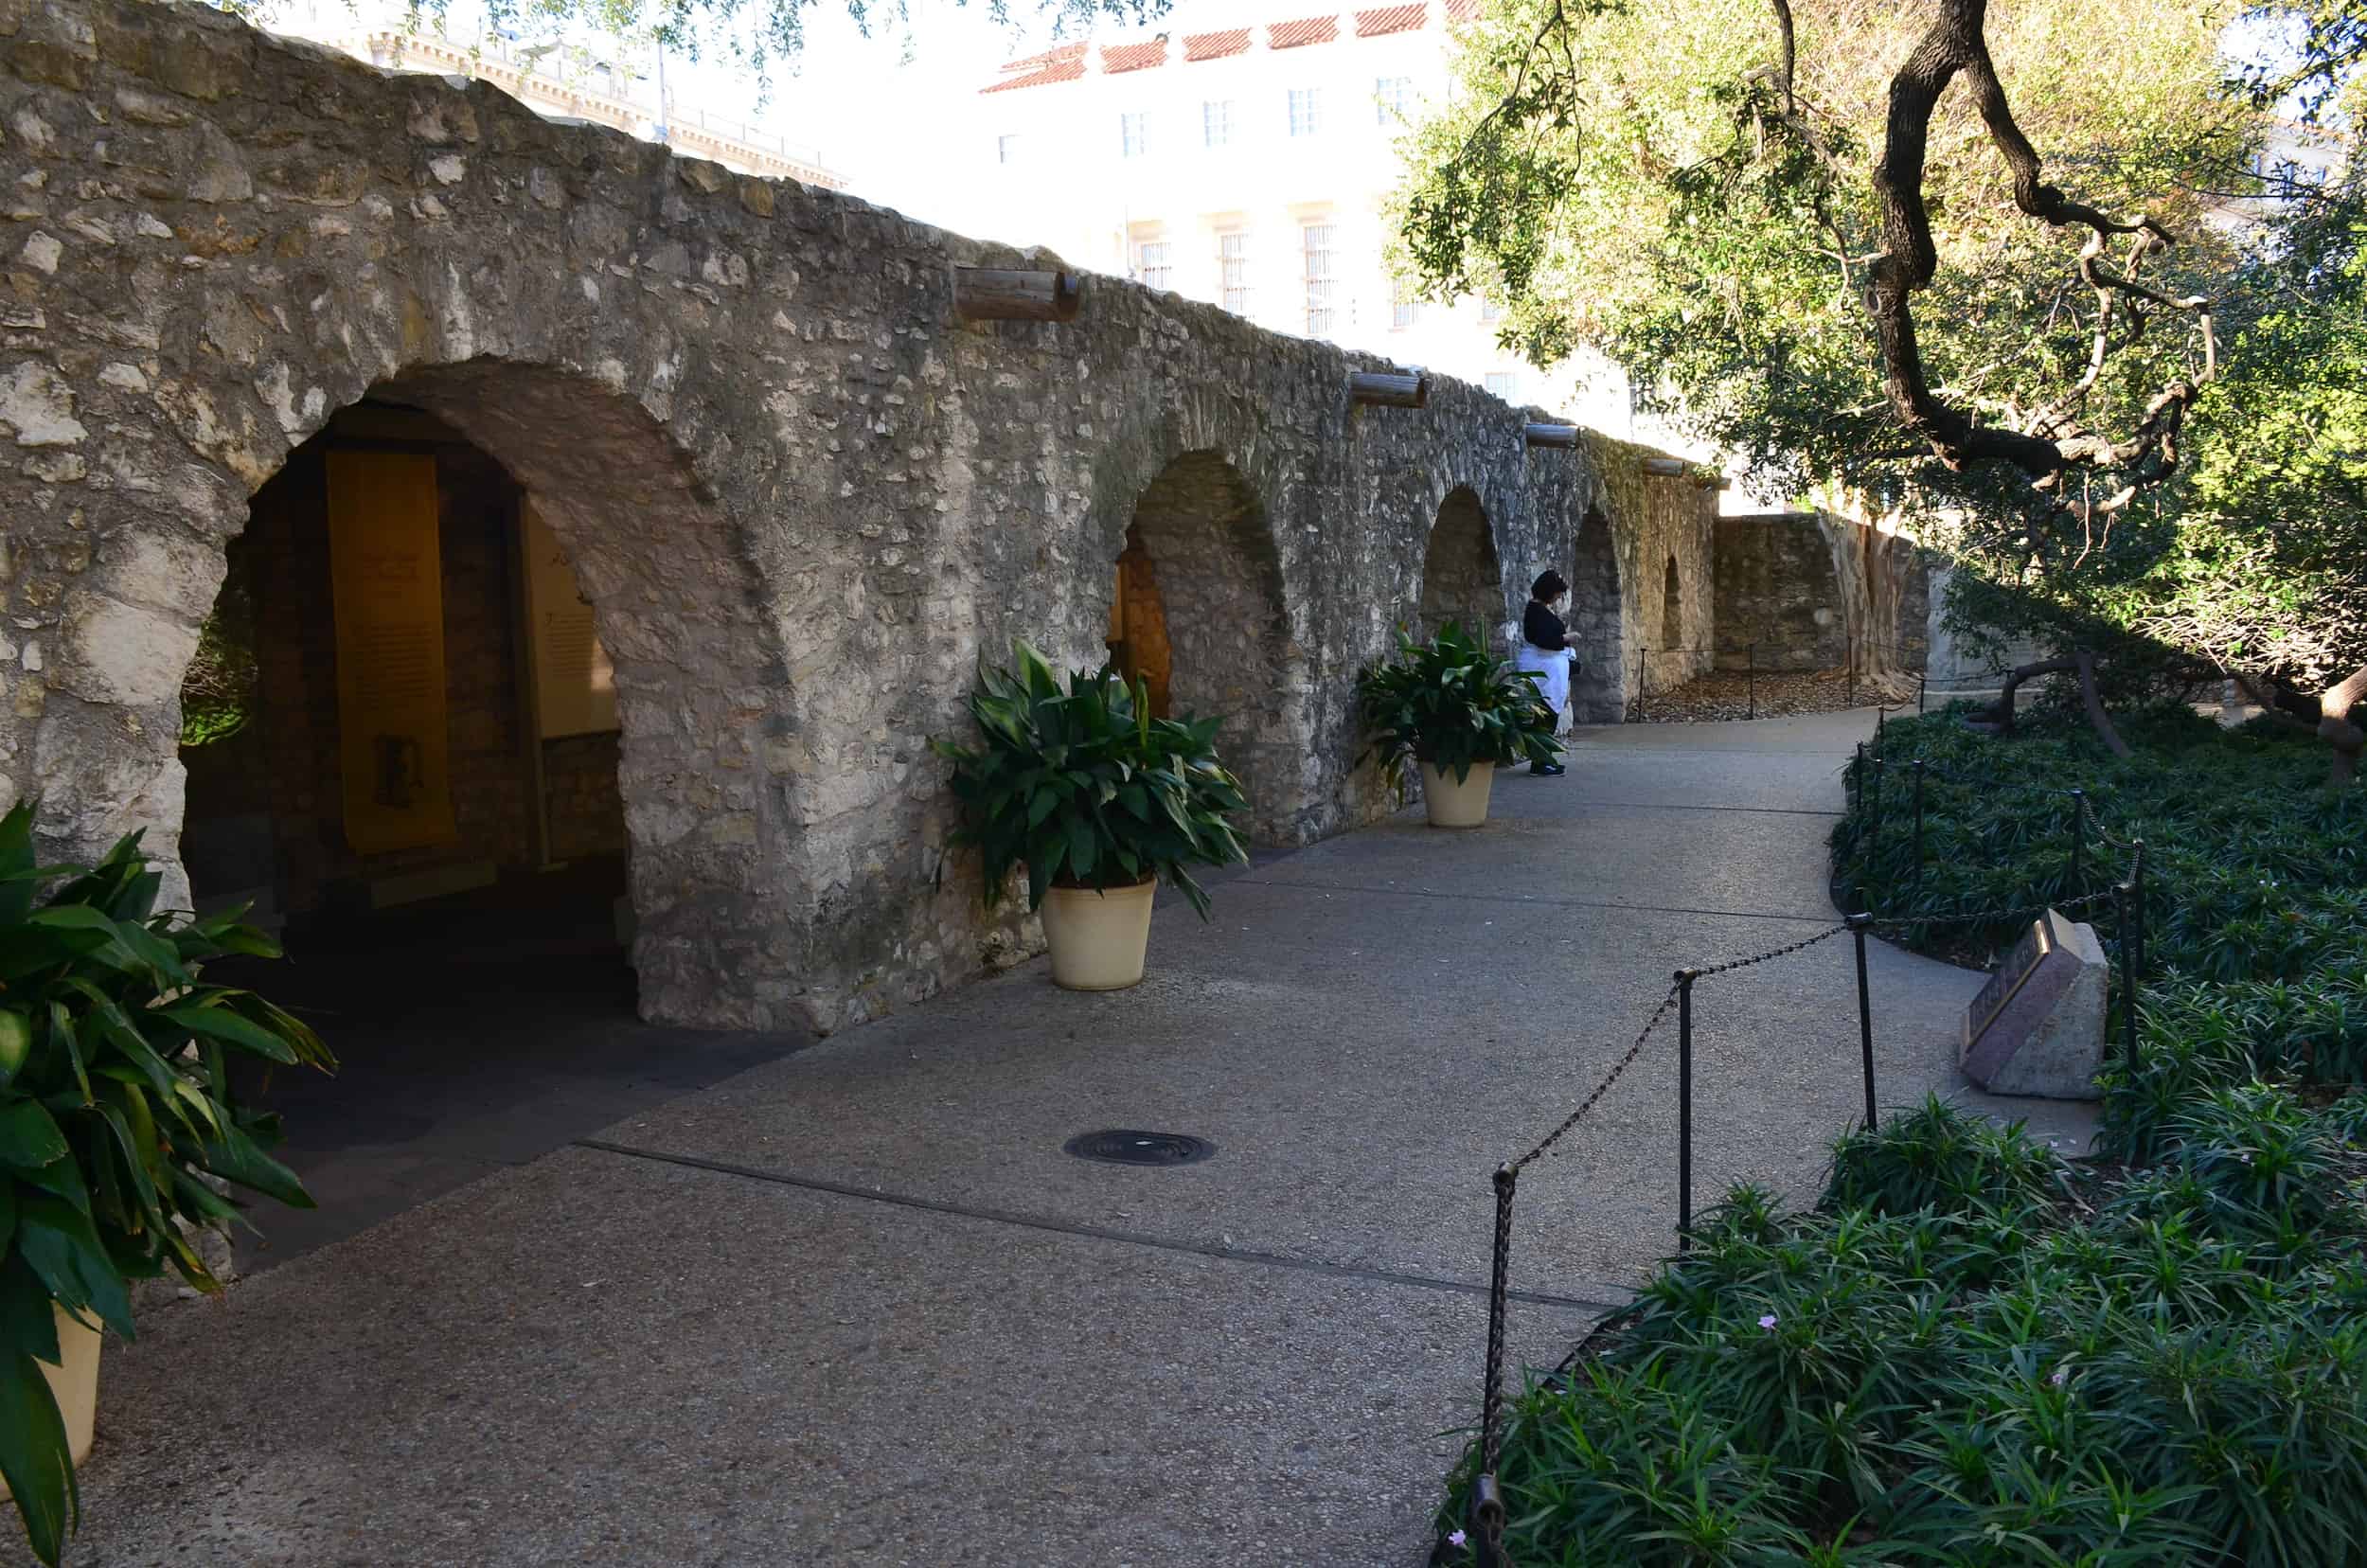 Long Barrack (convent) at the Alamo in San Antonio, Texas